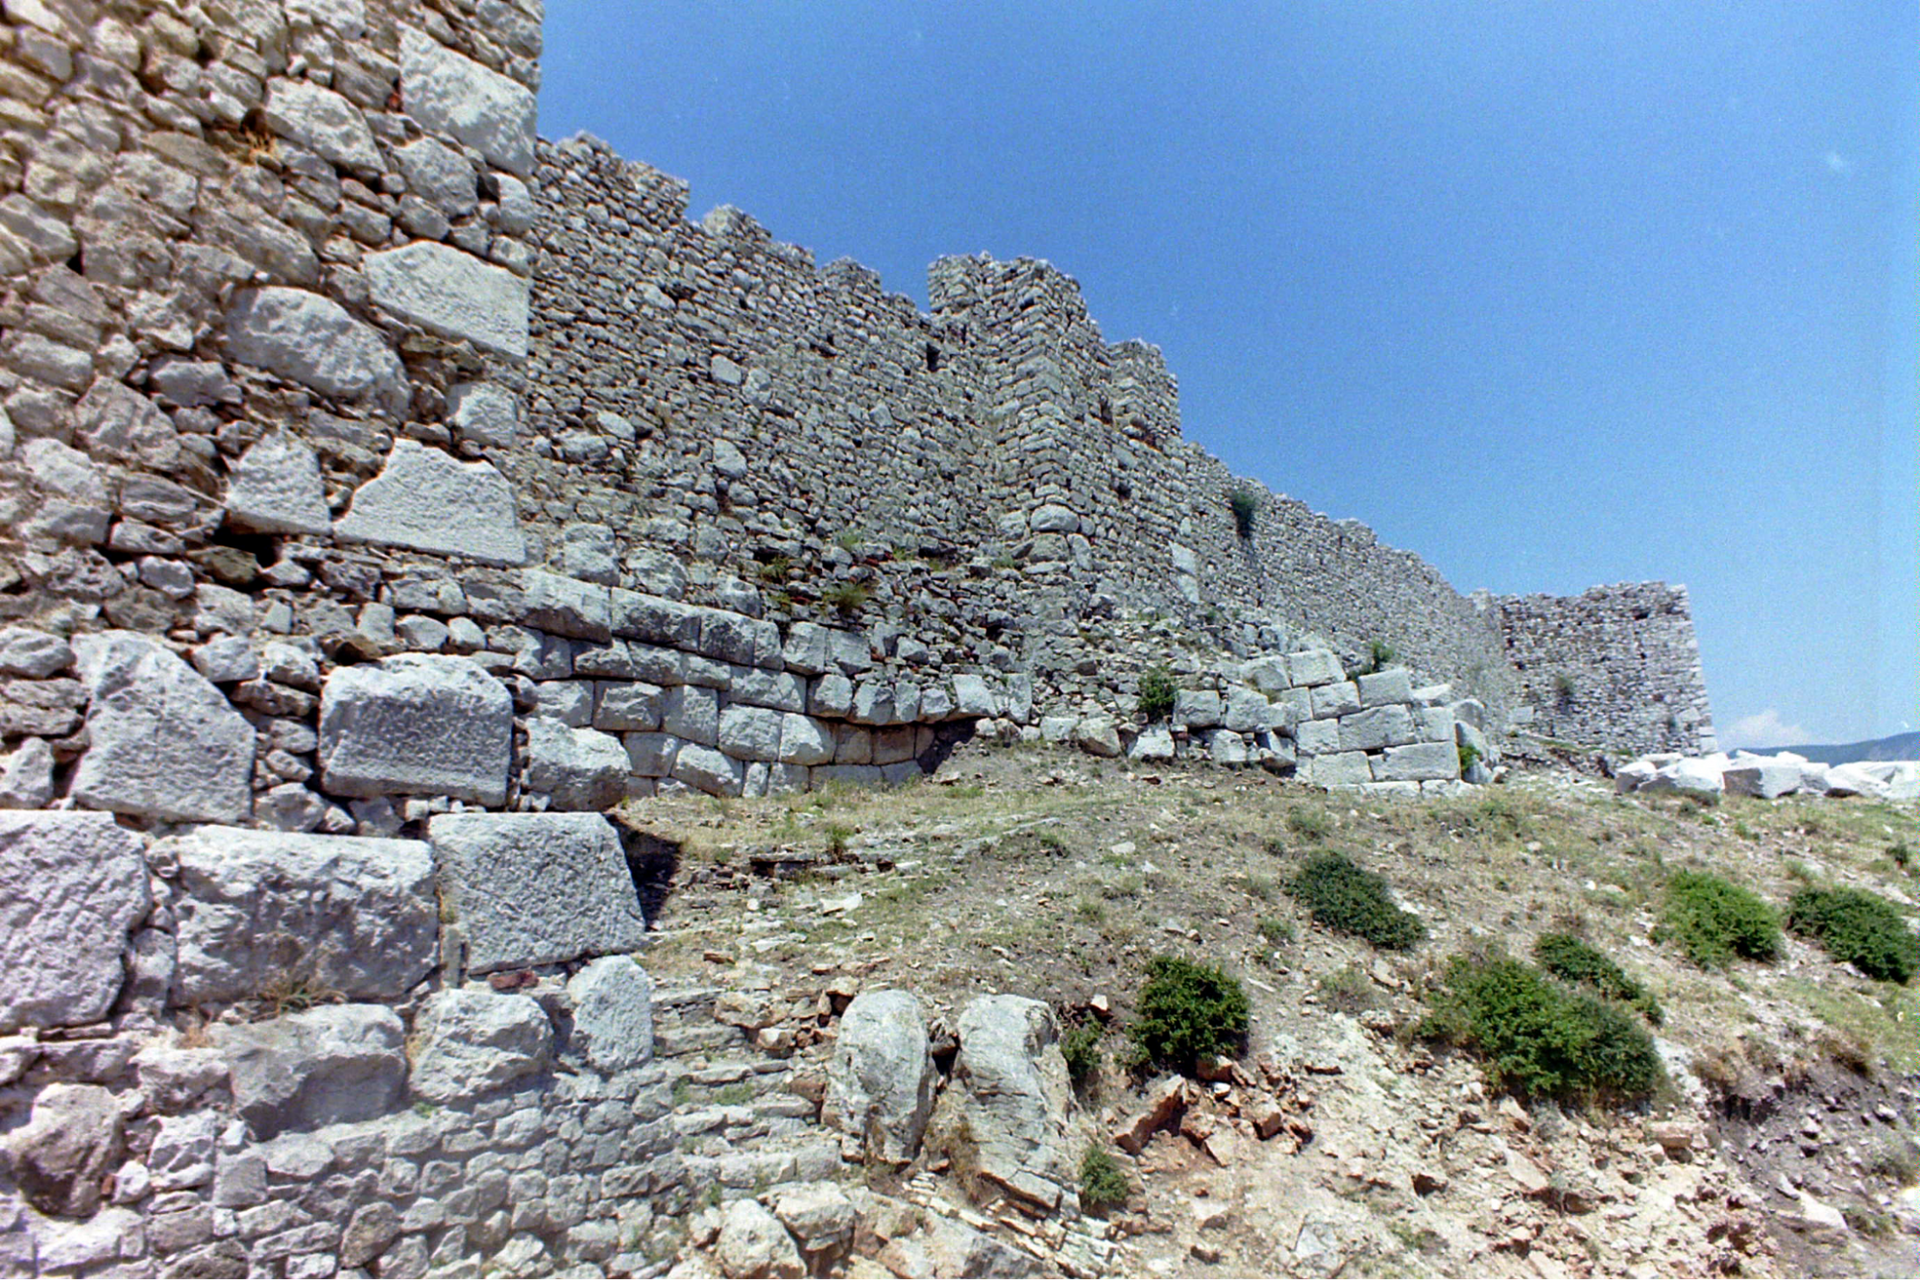 Lezhë Castle